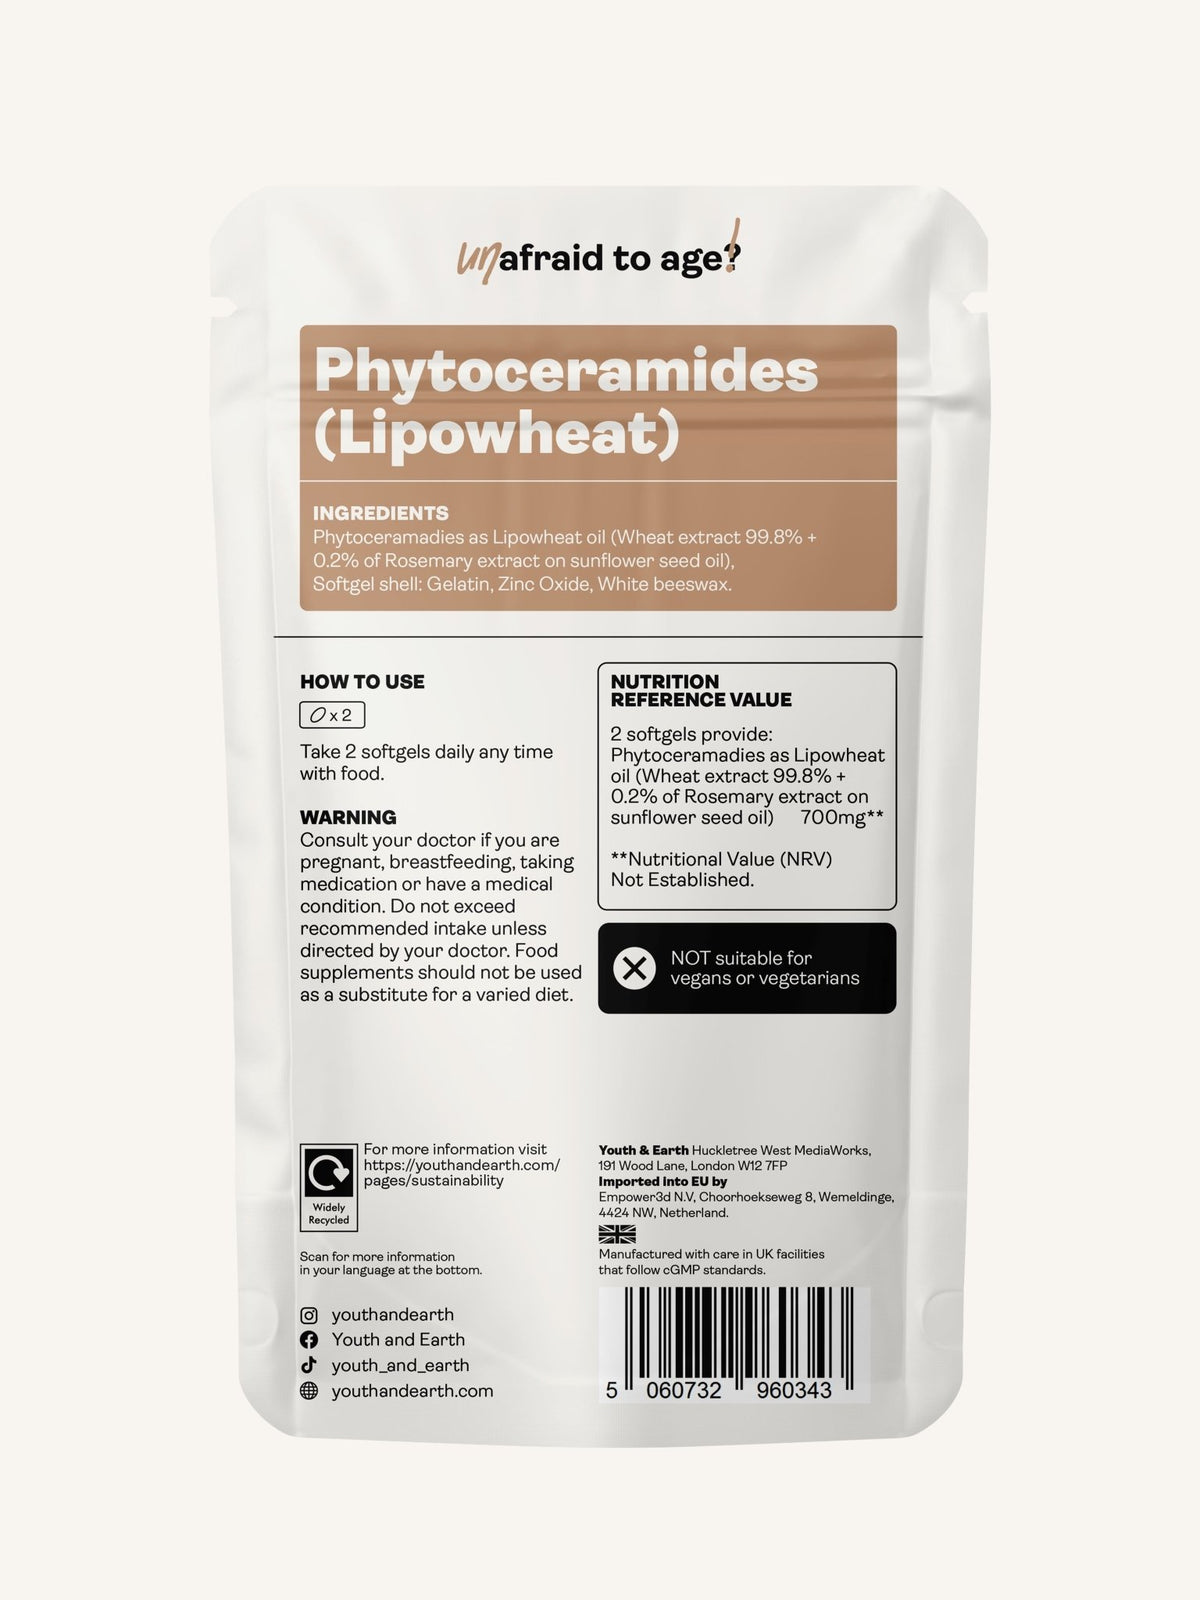 Phytoceramides (Lipowheat) – 350mg x 60 Capsules - Youth &amp; Earth EU Store